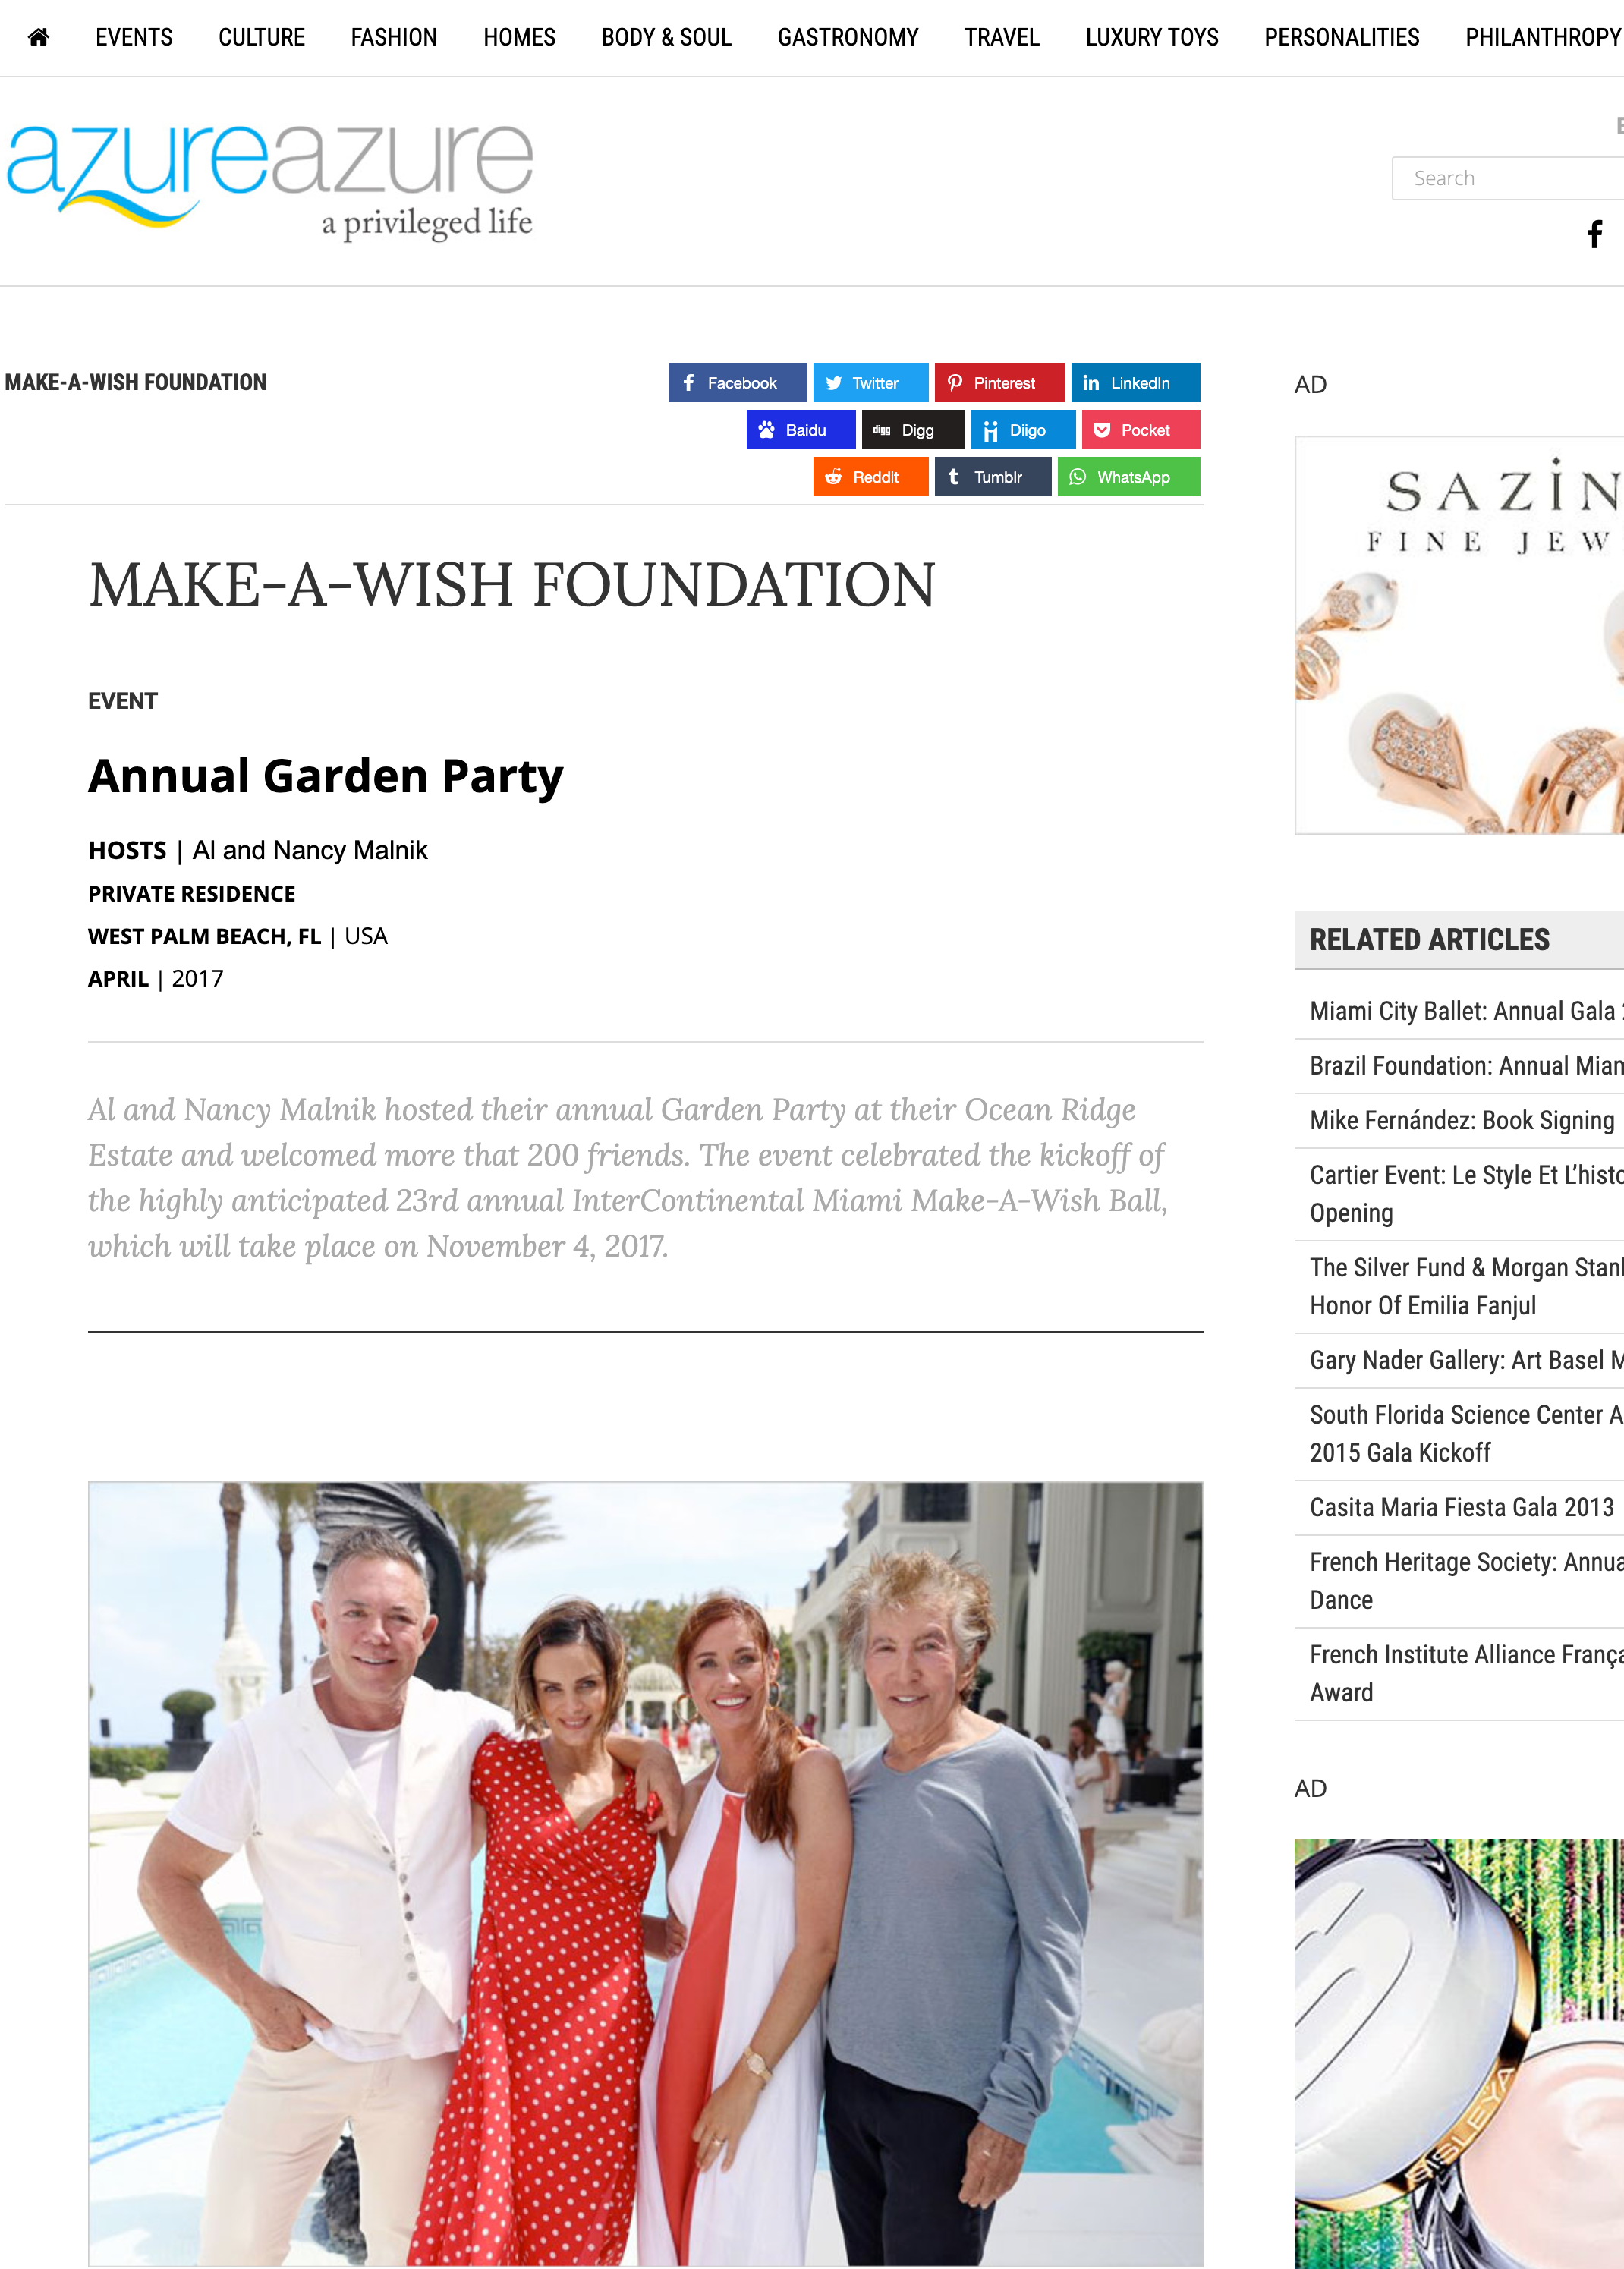 Make-A-Wish Foundation Annual Garden Party (Apr 2017)